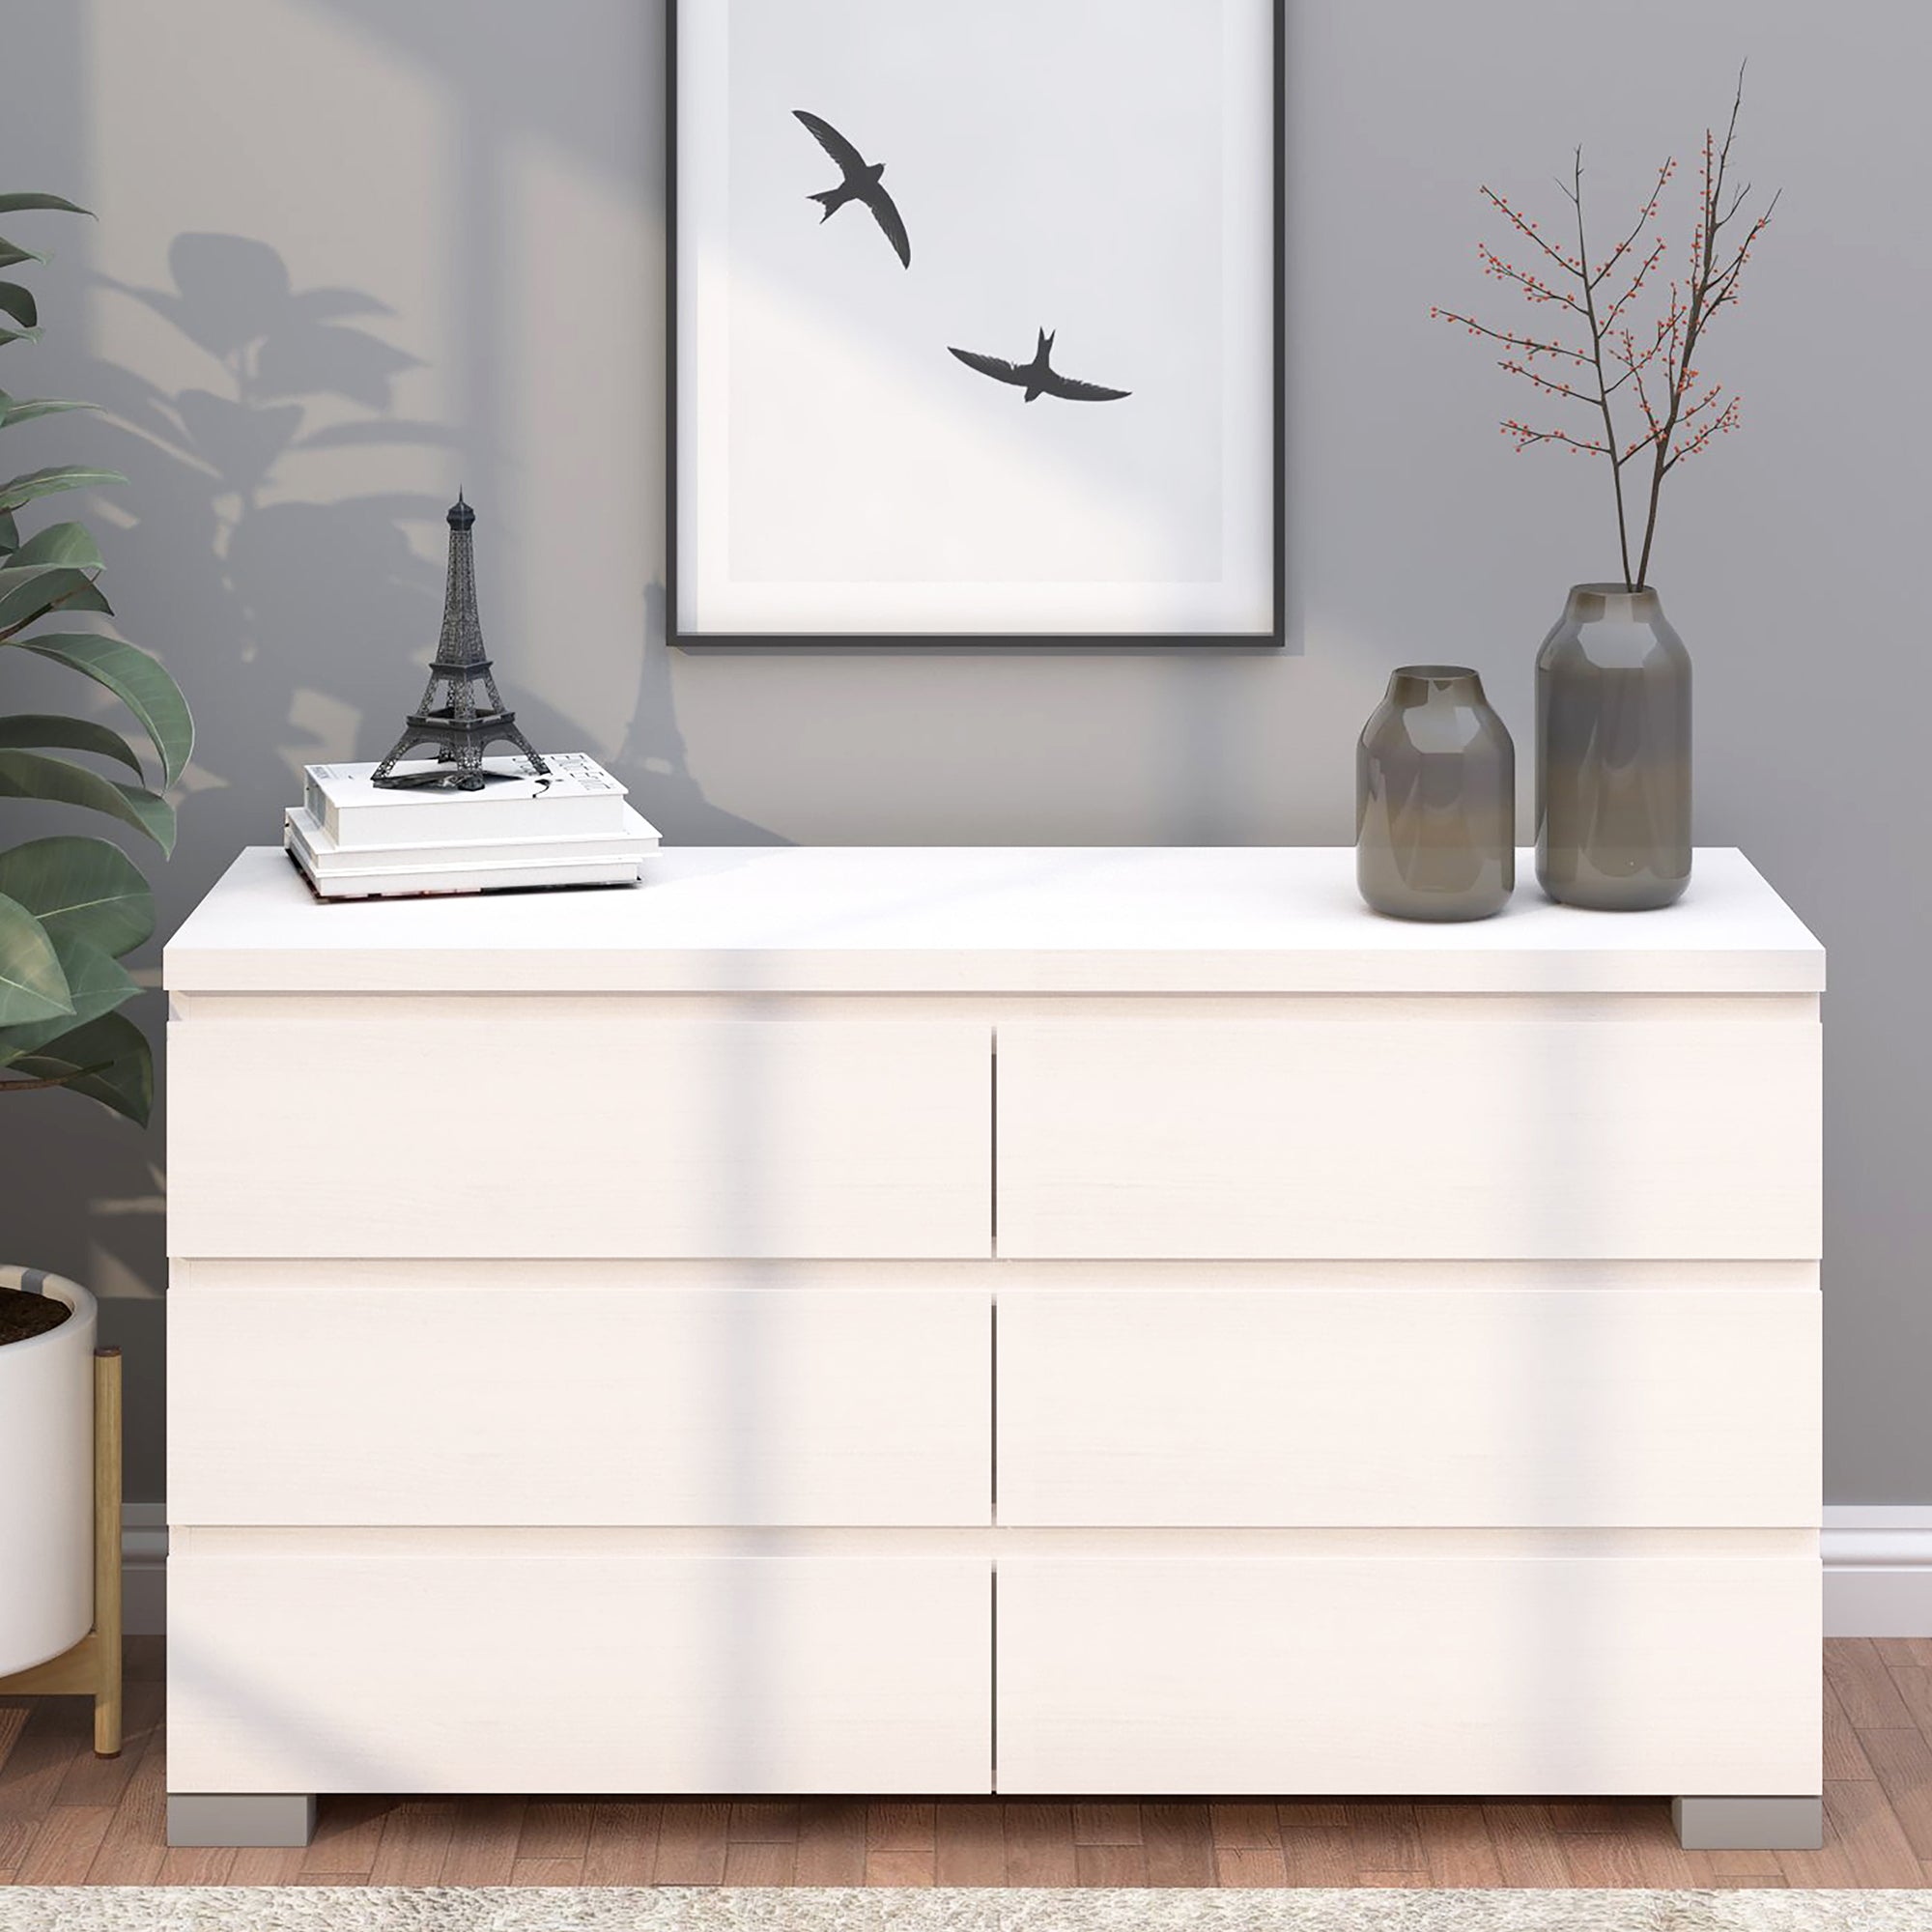 Elara Modern 6 Drawer Dresser: Stylish Storage for Your Bedroom